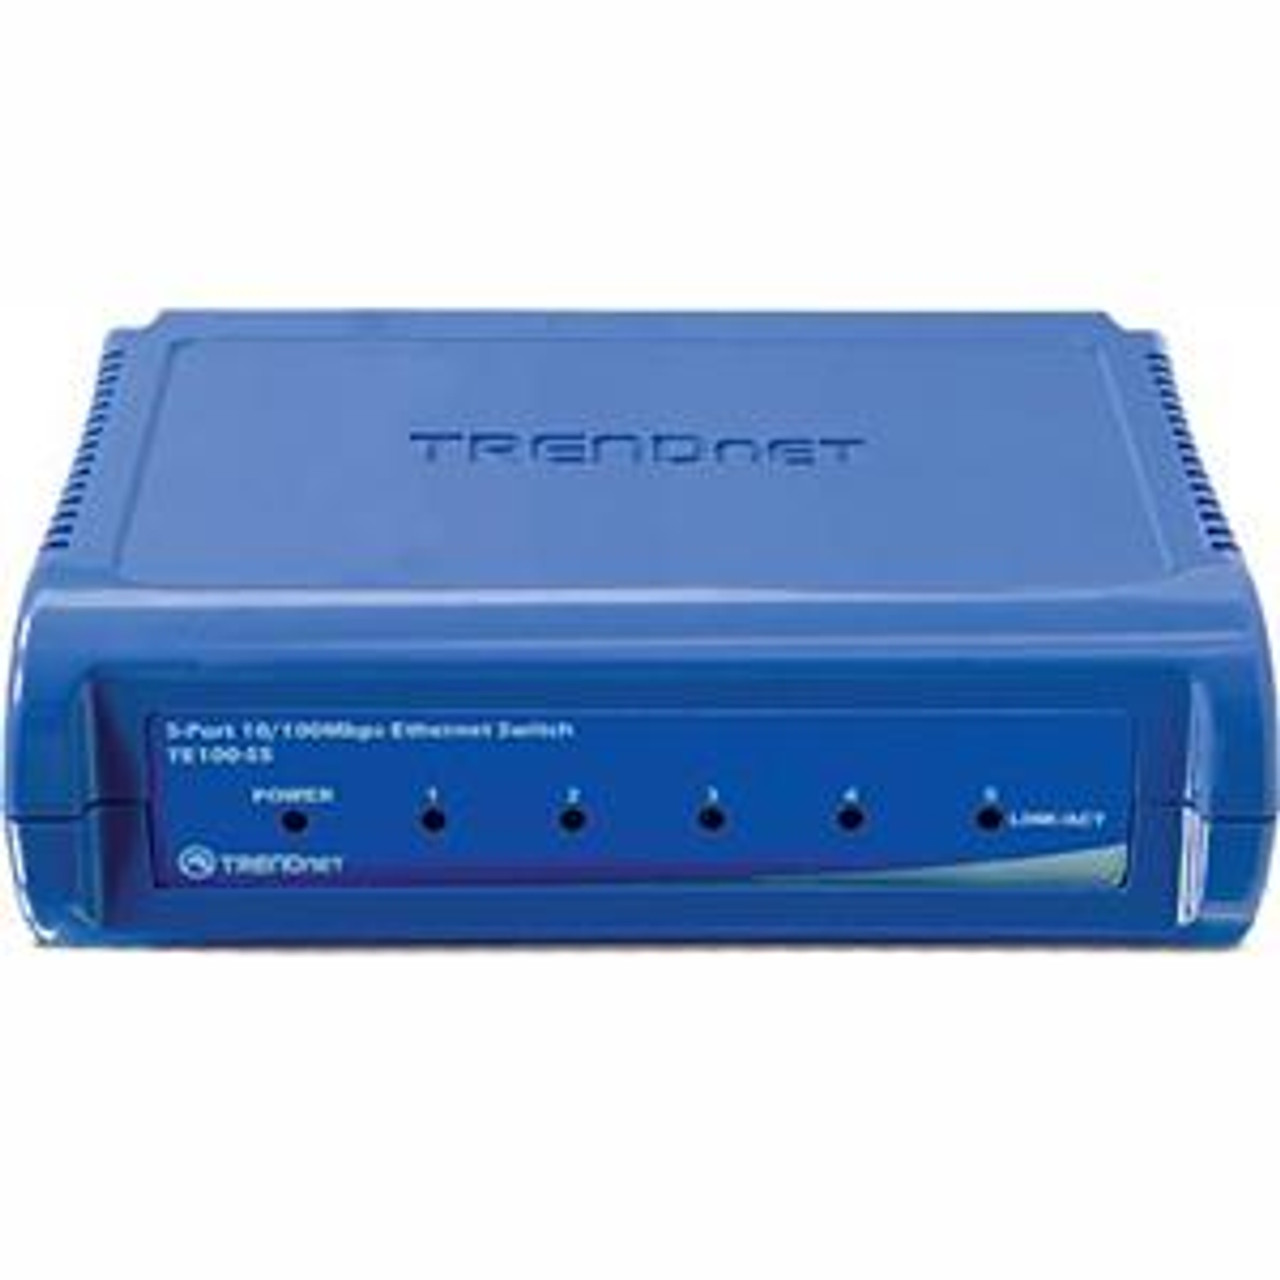 TE100-S5 TRENDnet 5-Ports RJ-45 10/100Base-TX Lan Fast Ethernet Switch (Refurbished)